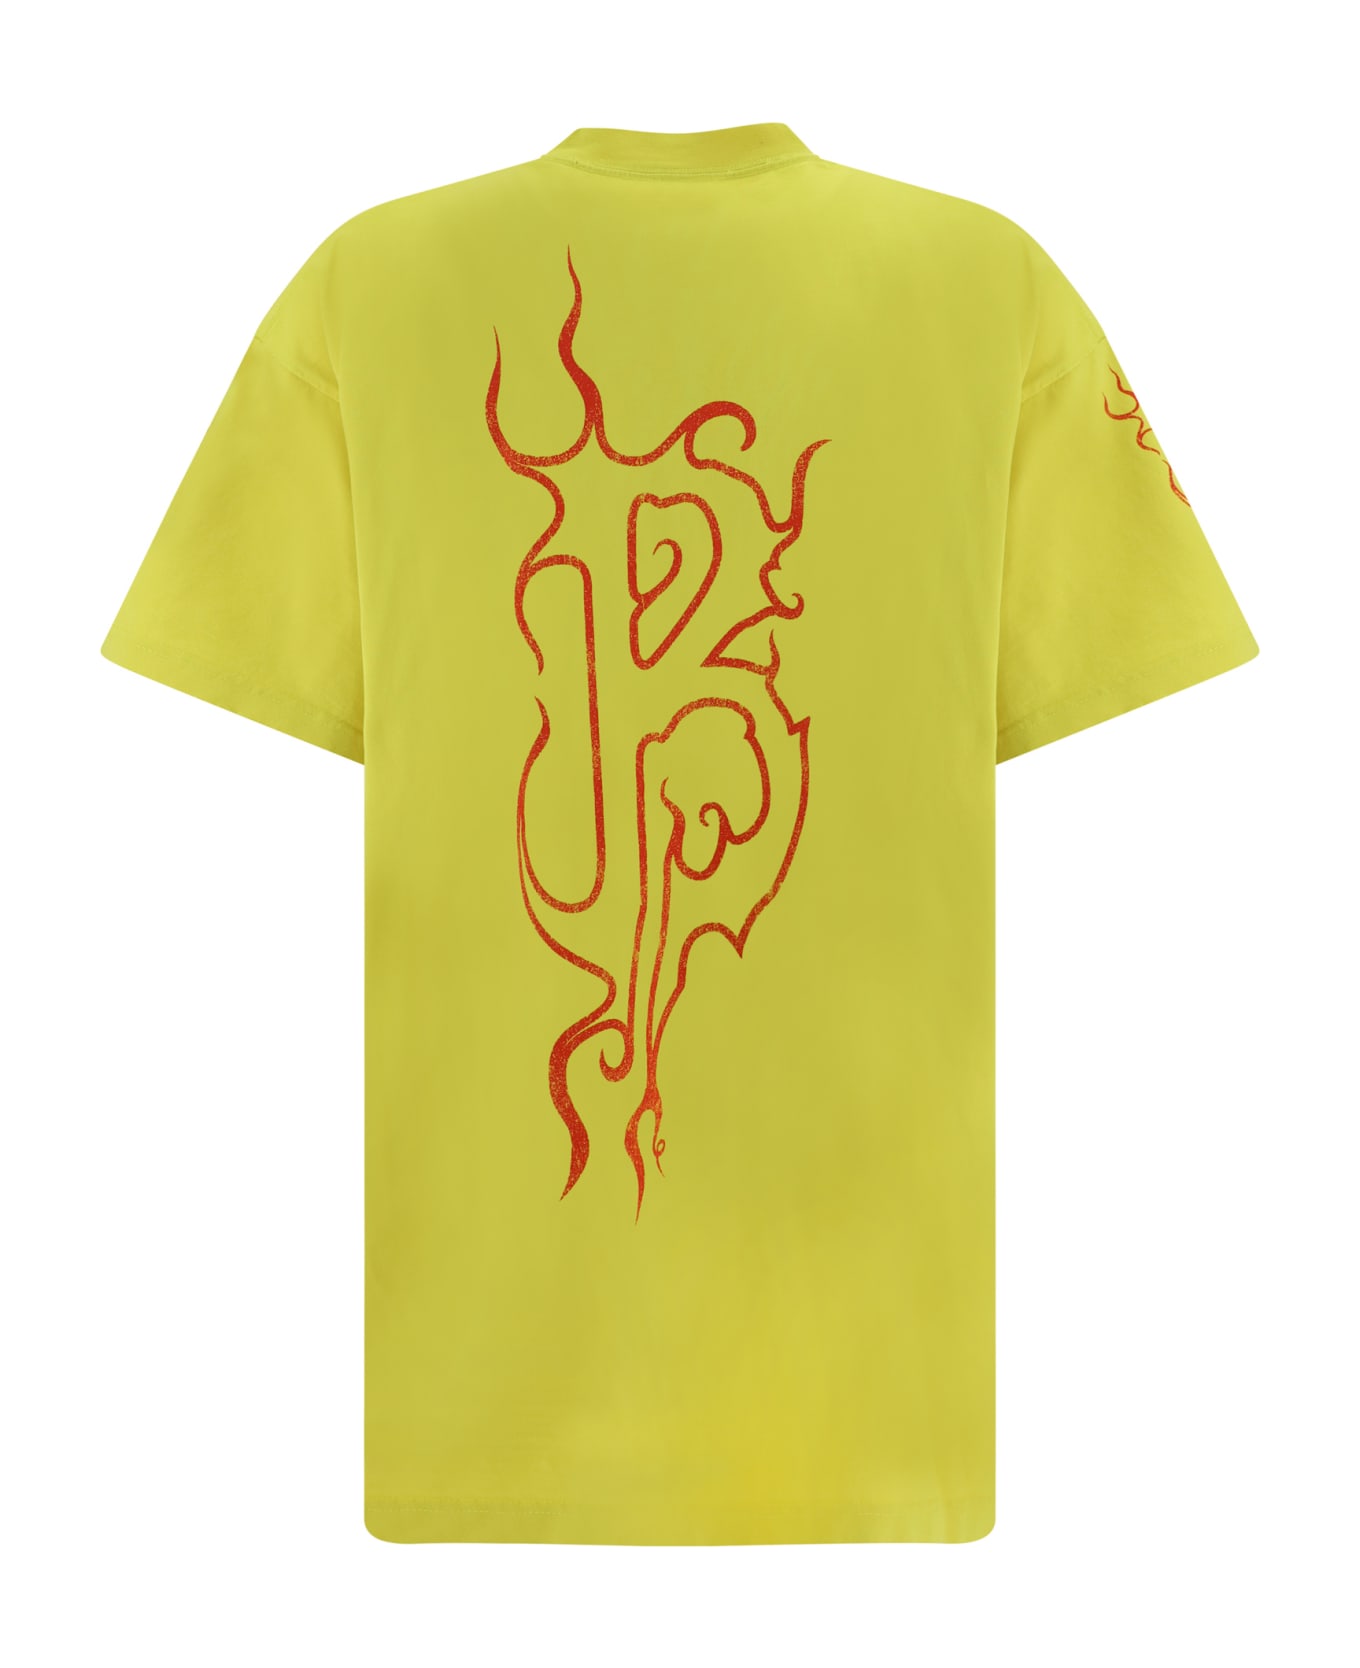 Balenciaga T-shirt - Yellow/red